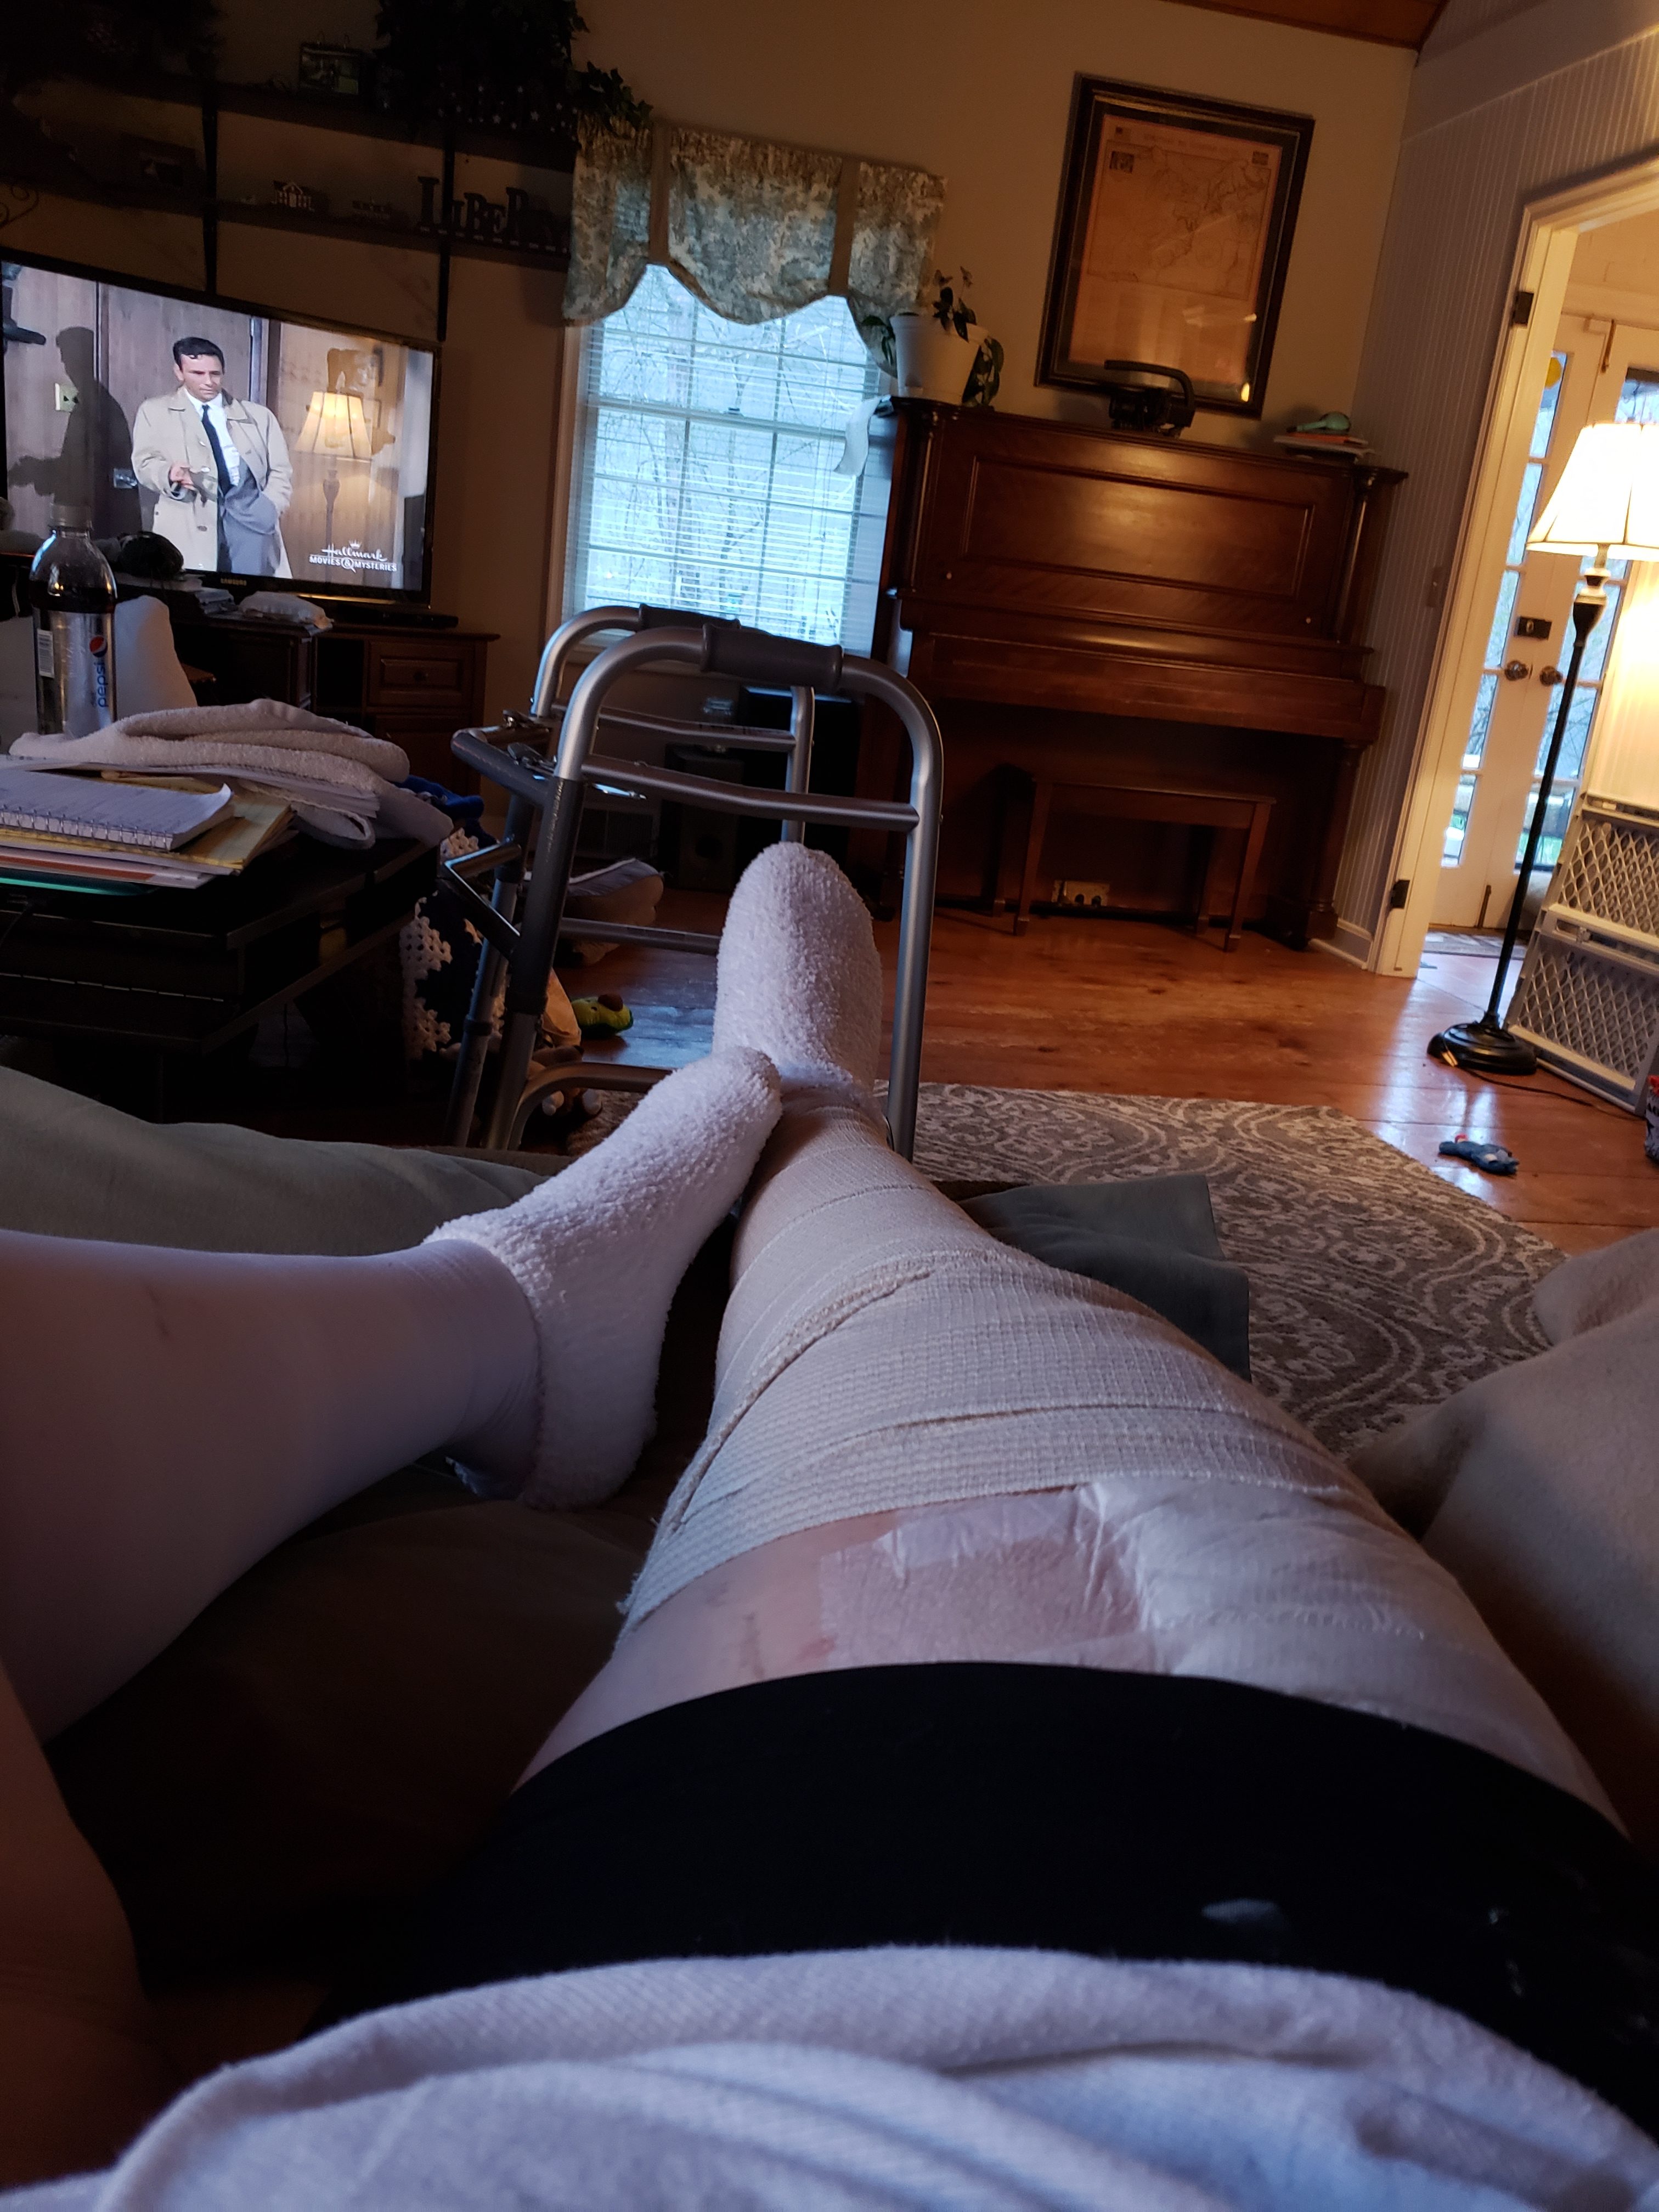 knee replacement surgery week 1